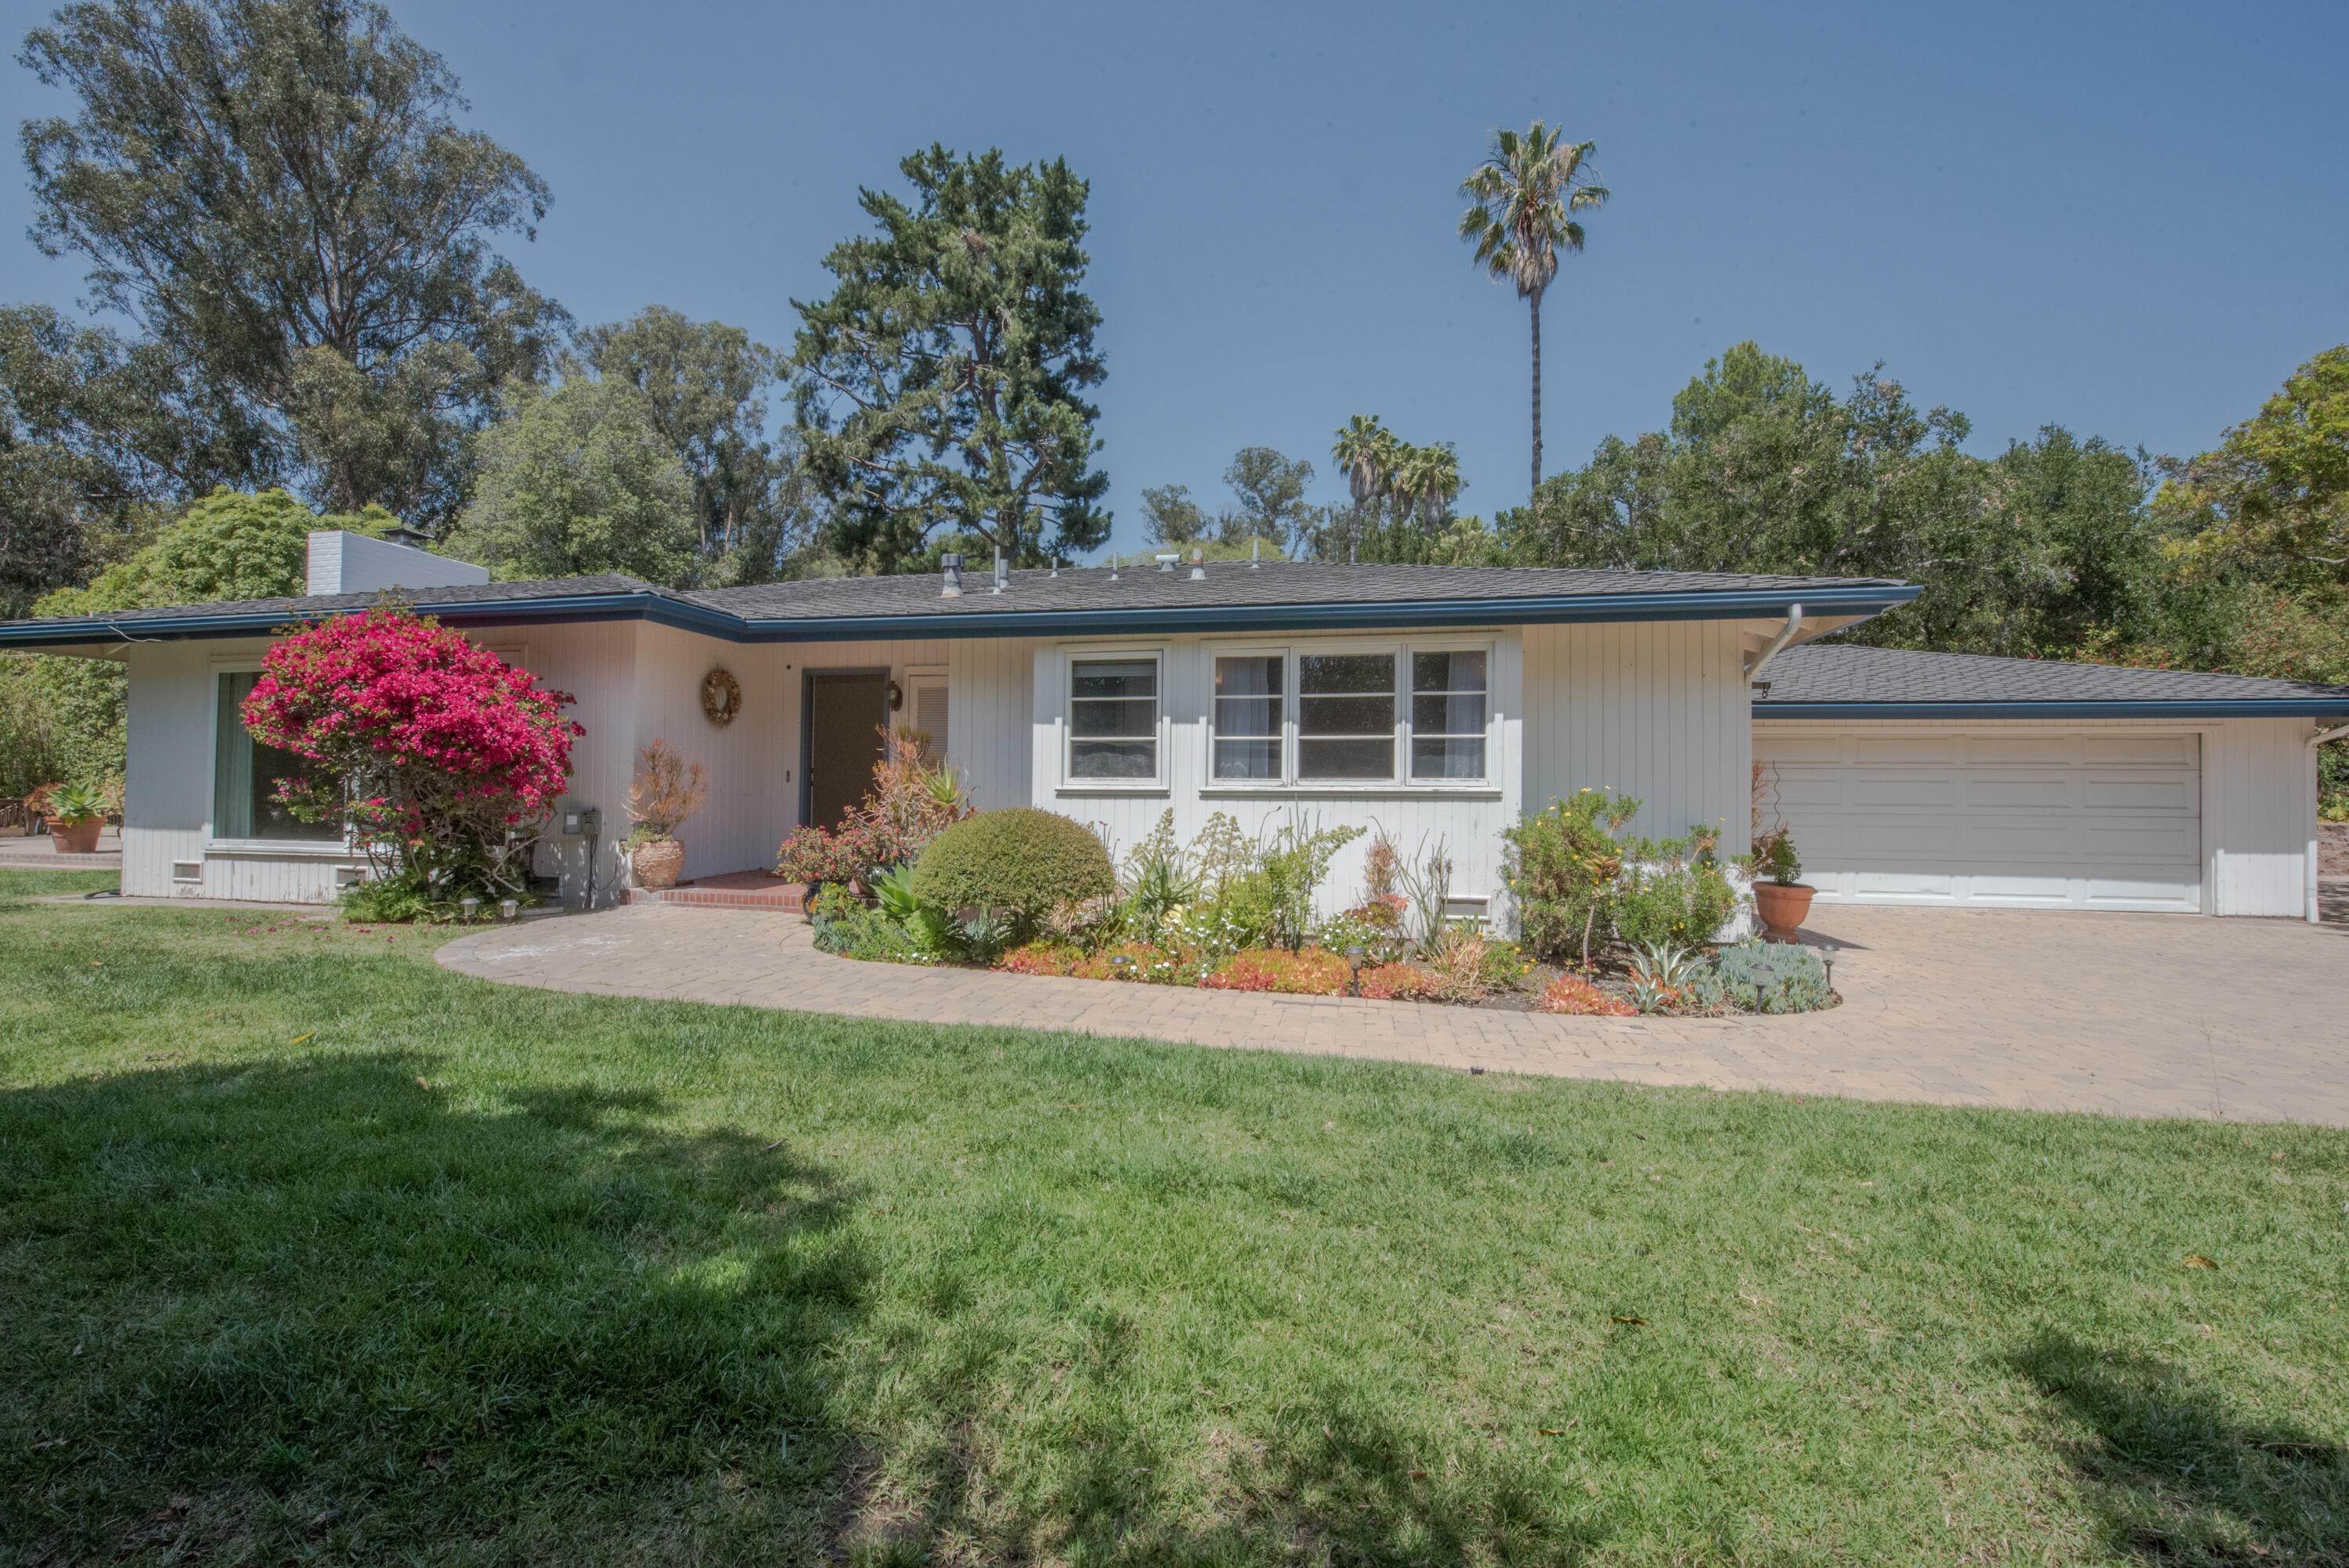 1. Estate for Sale at 845 Woodland Drive Santa Barbara, California 93108 United States